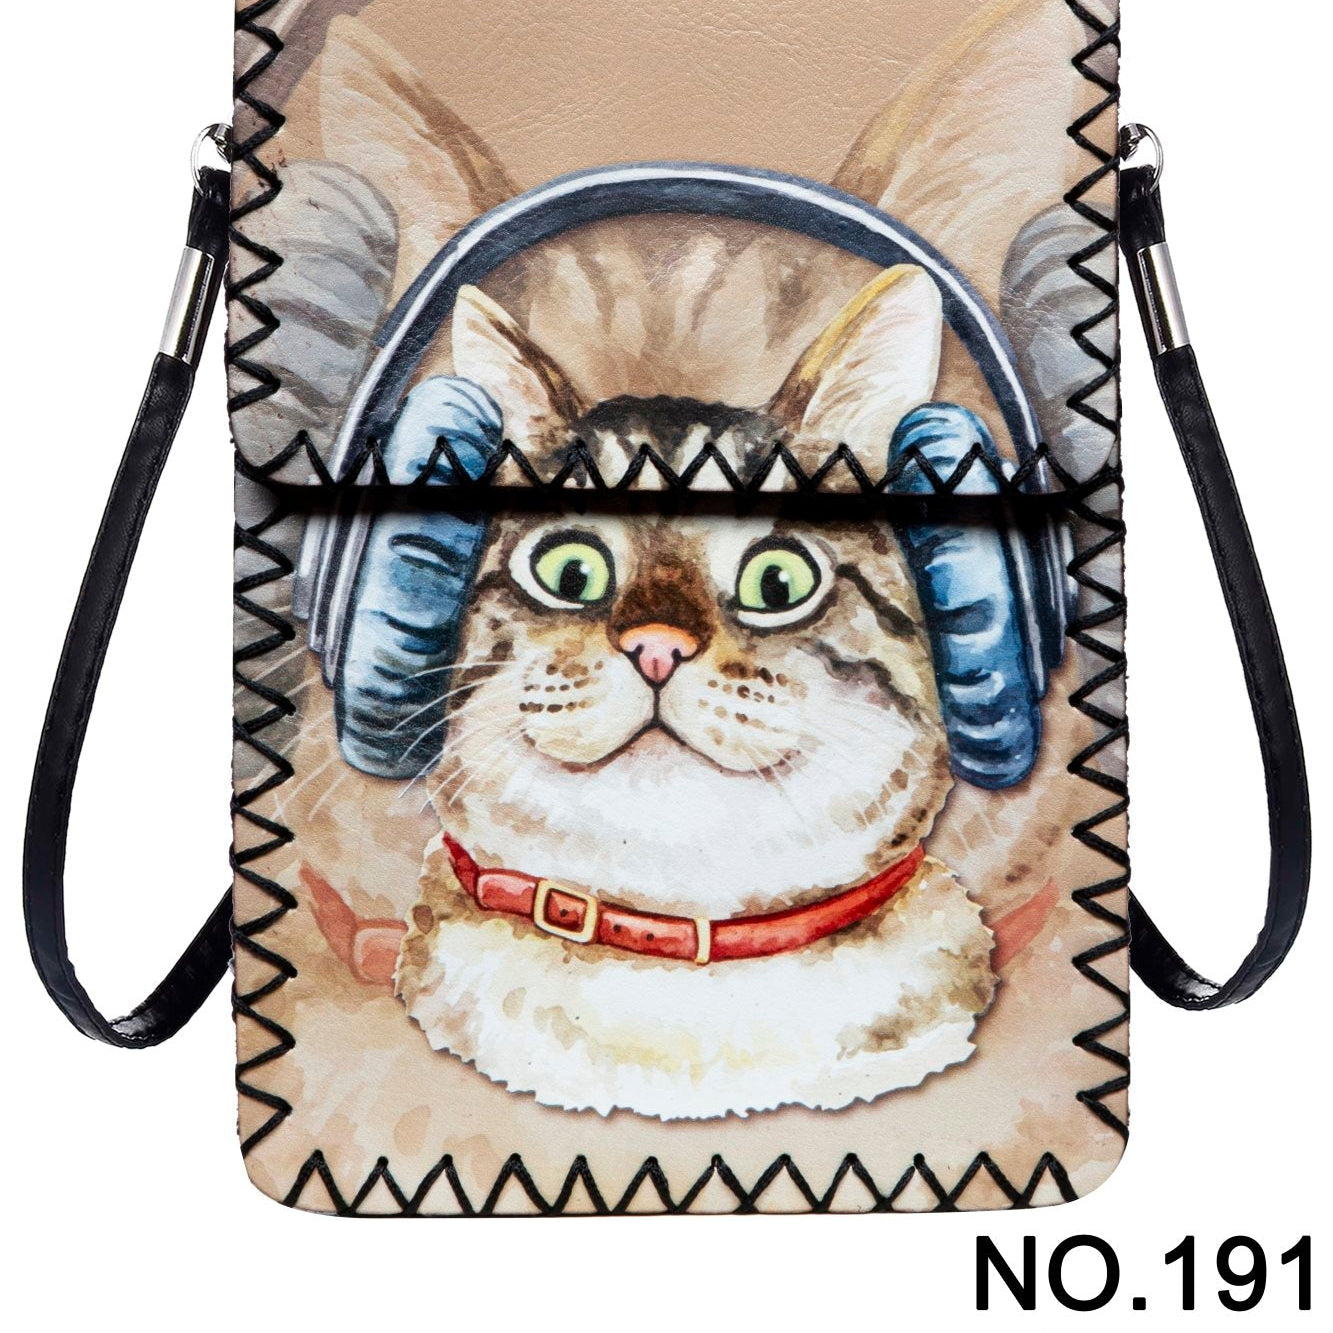 Cat With Headphones PrintCrossbody Bag HB0580 - NO.191